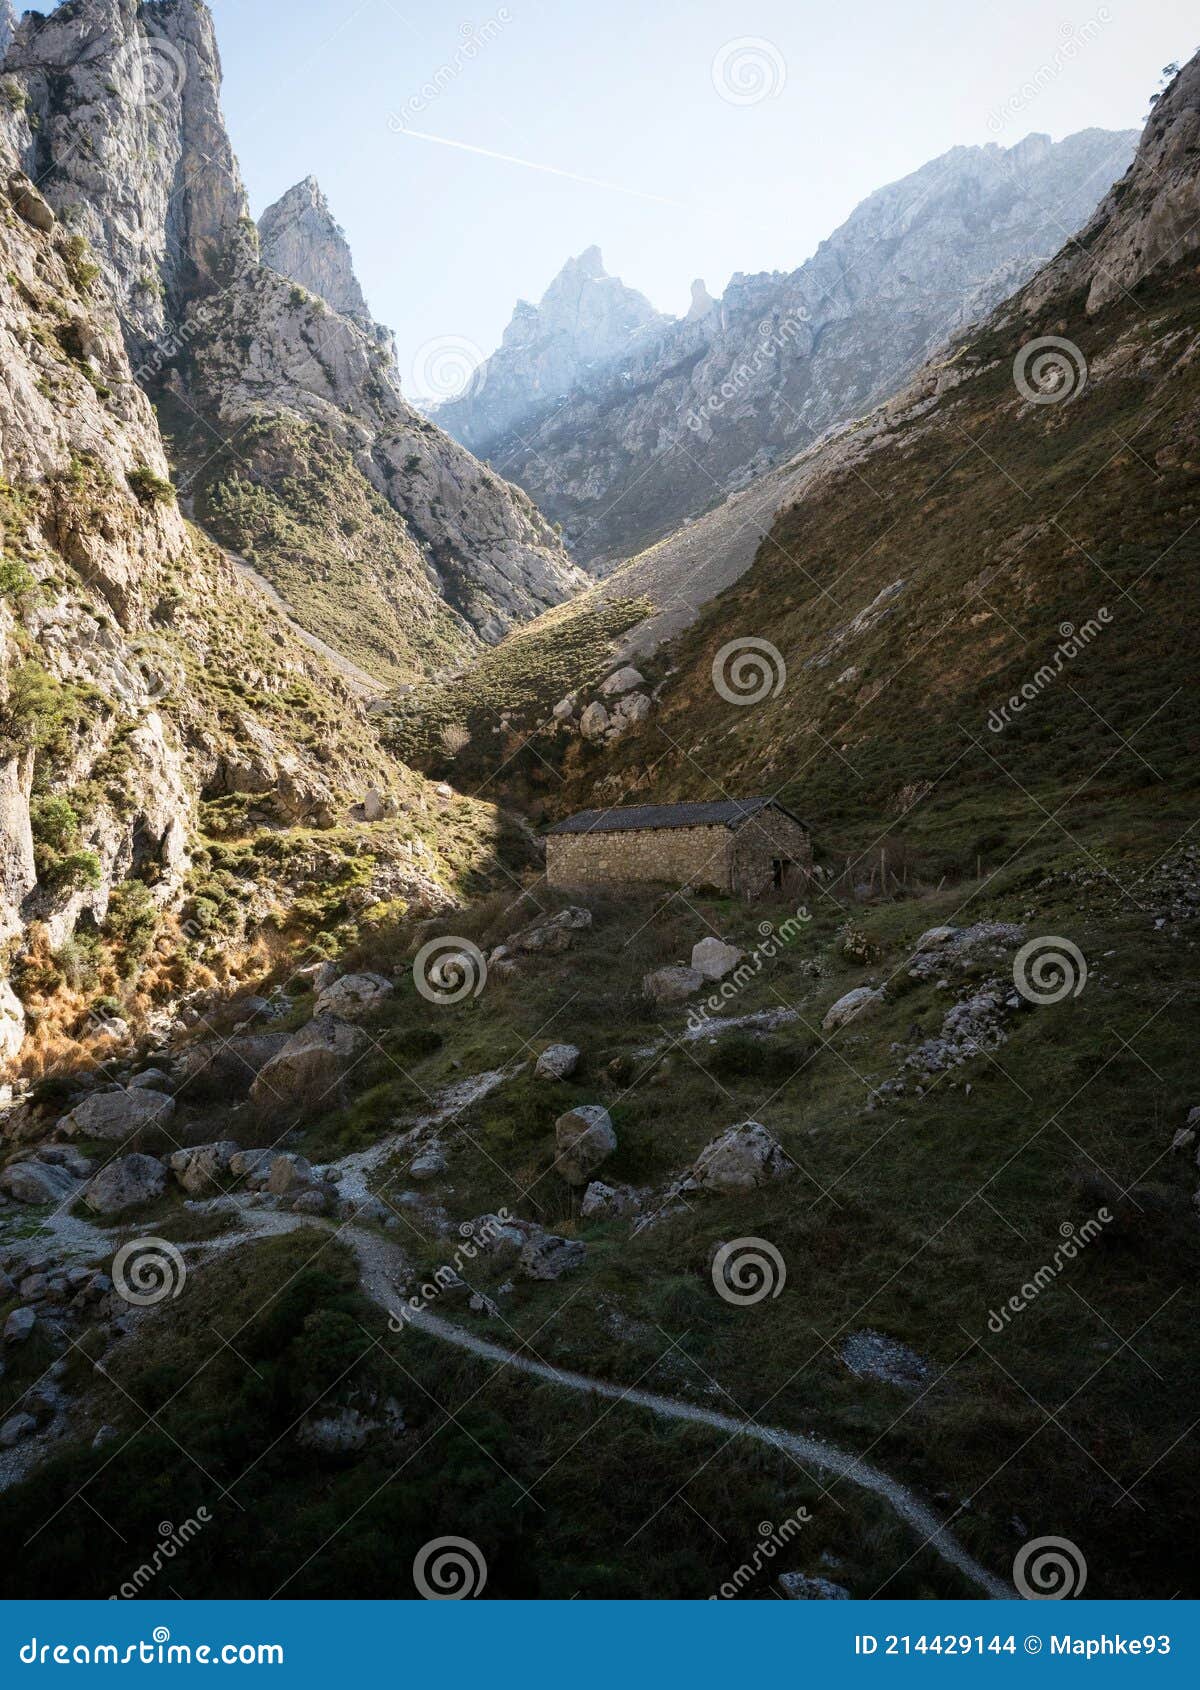 idyllic cabin mountain hut along valley hiking trail path route senda del cares in picos de europa leon asturias spain